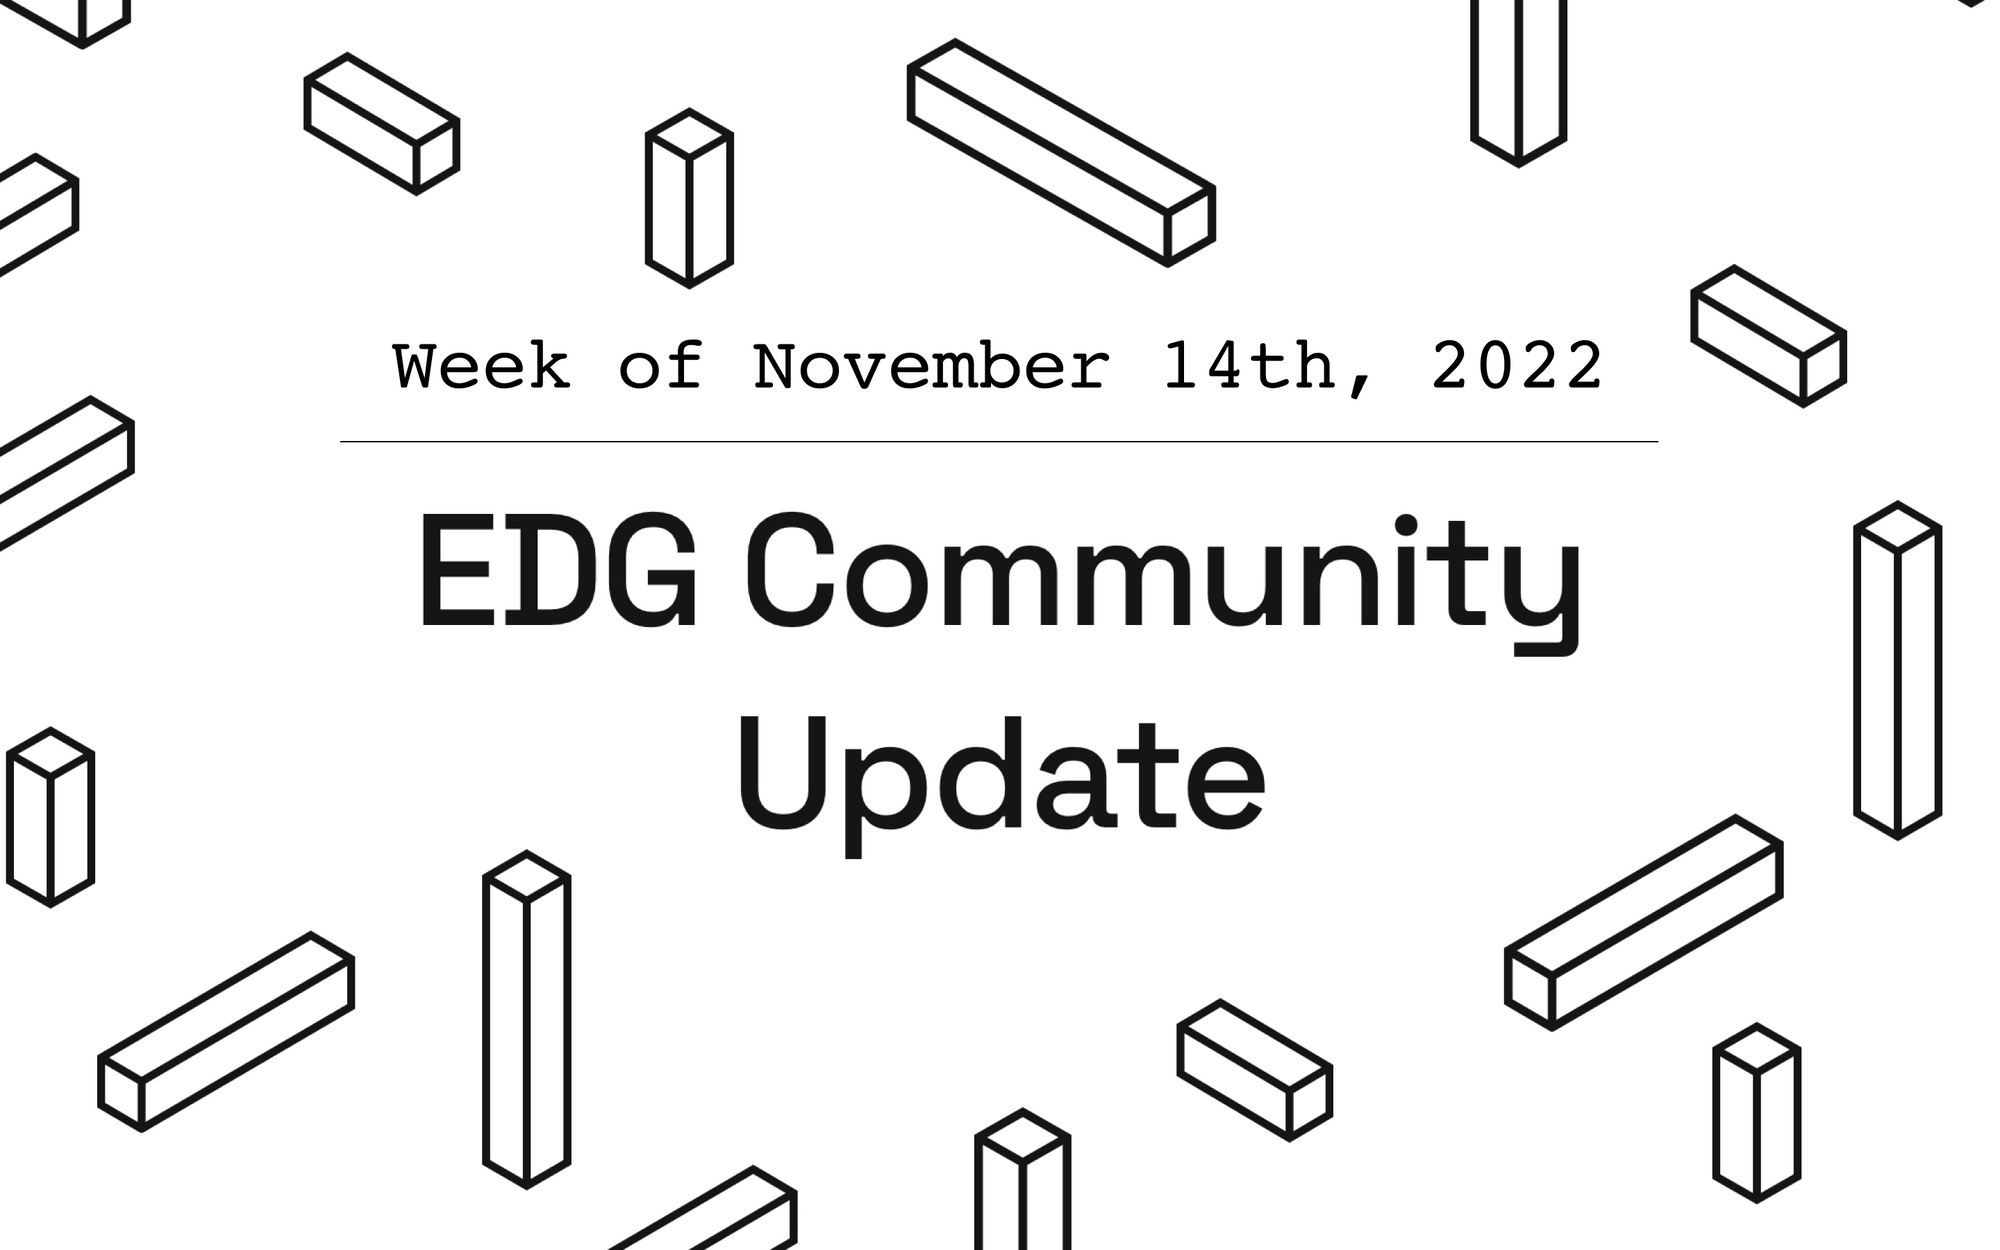 EDG Community Update: Week of November 14th, 2022